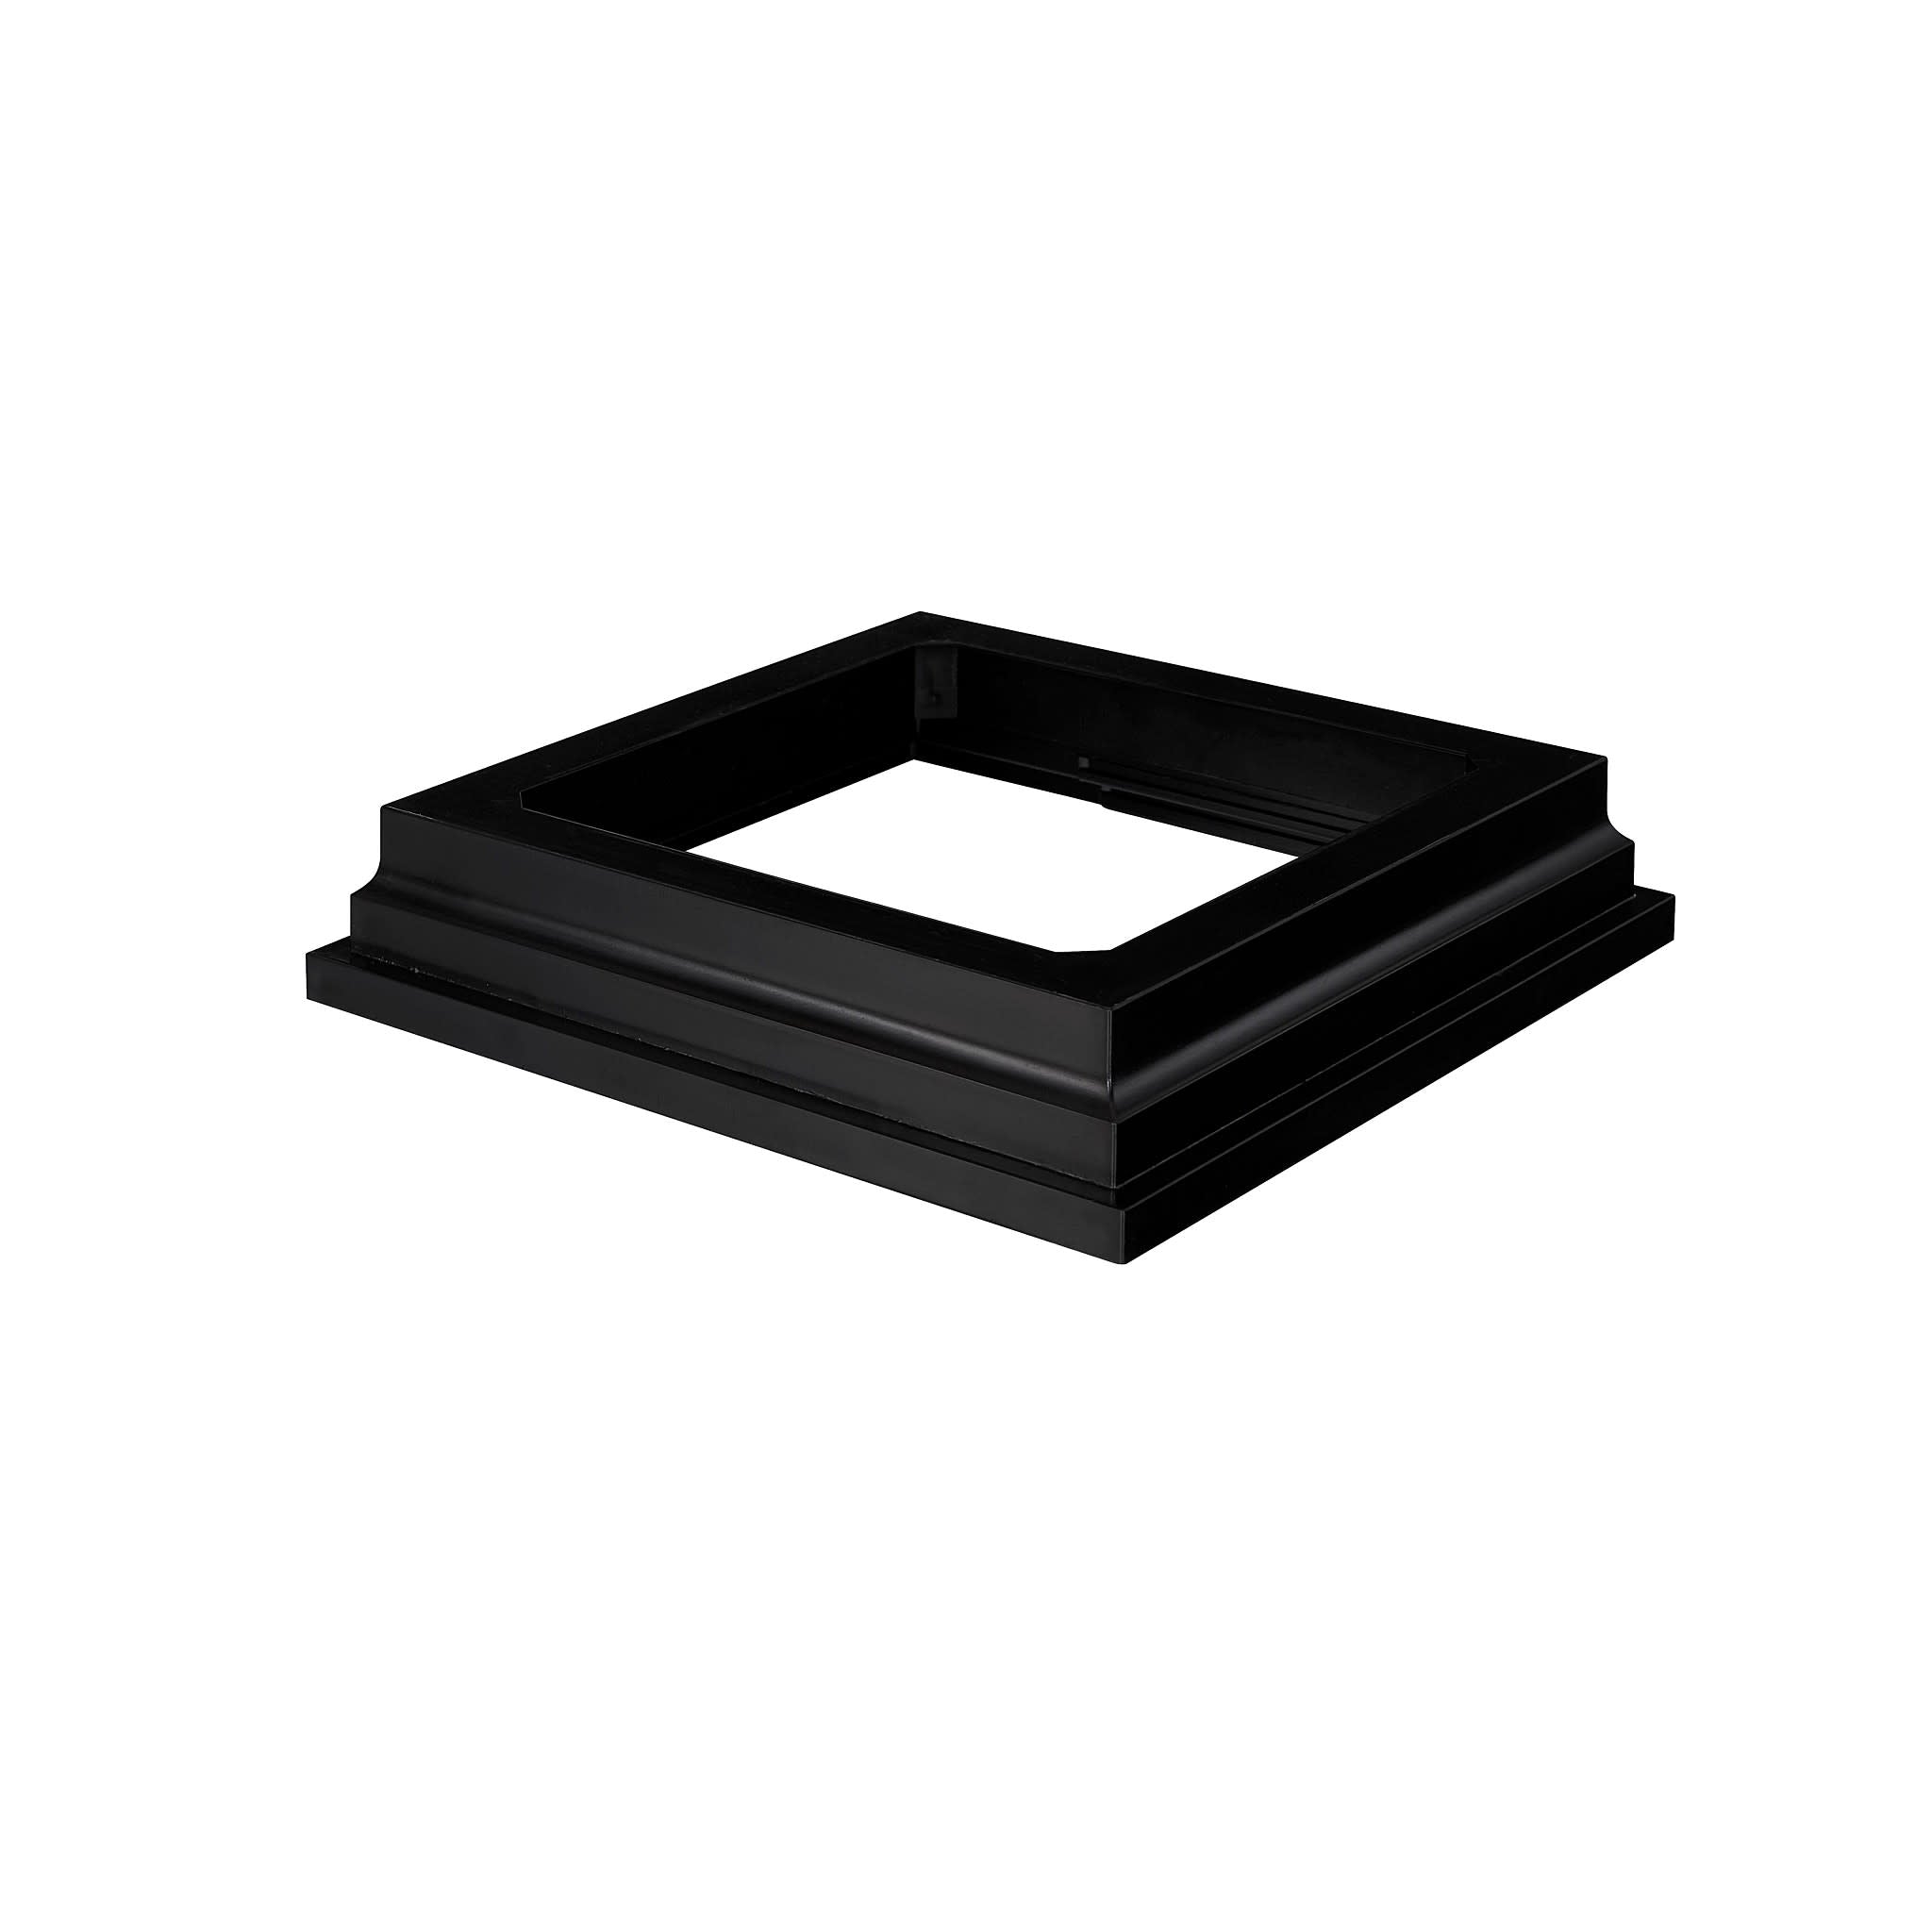 Fiberon Post Moulding | Fiberon Composite Decking, Railing, Furniture .